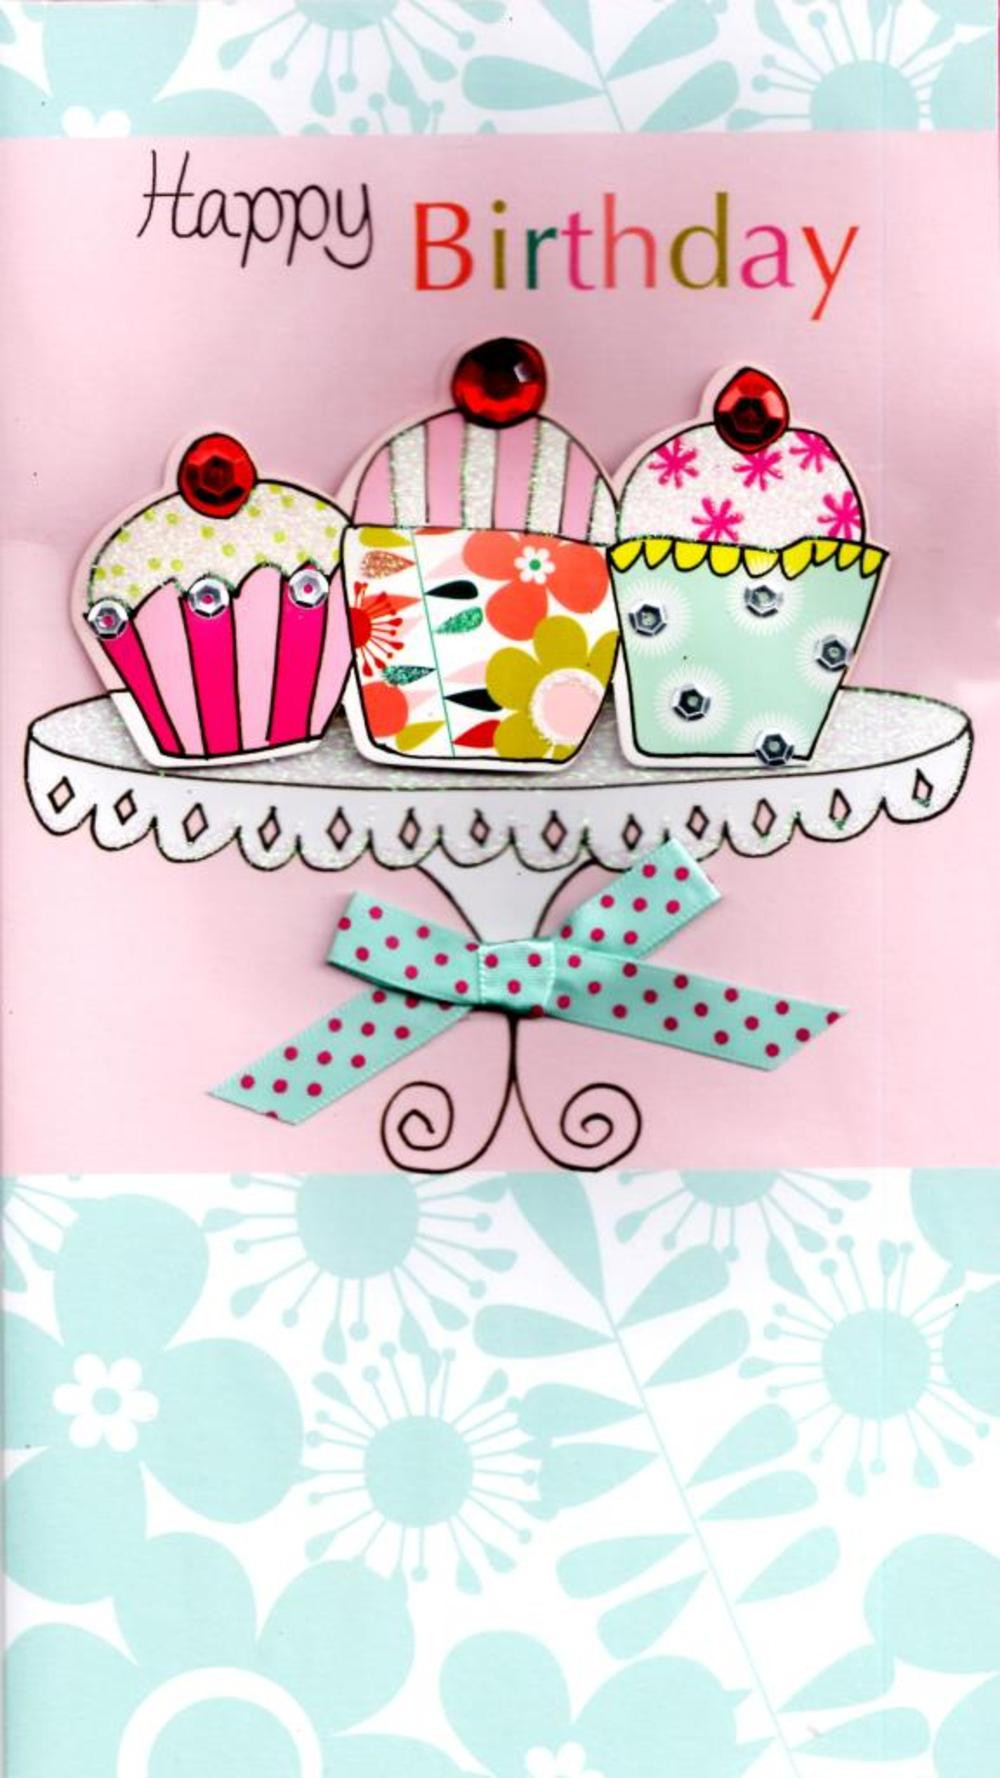 Happy Birthday Greeting Cards
 Cupcakes Pretty Happy Birthday Greeting Card